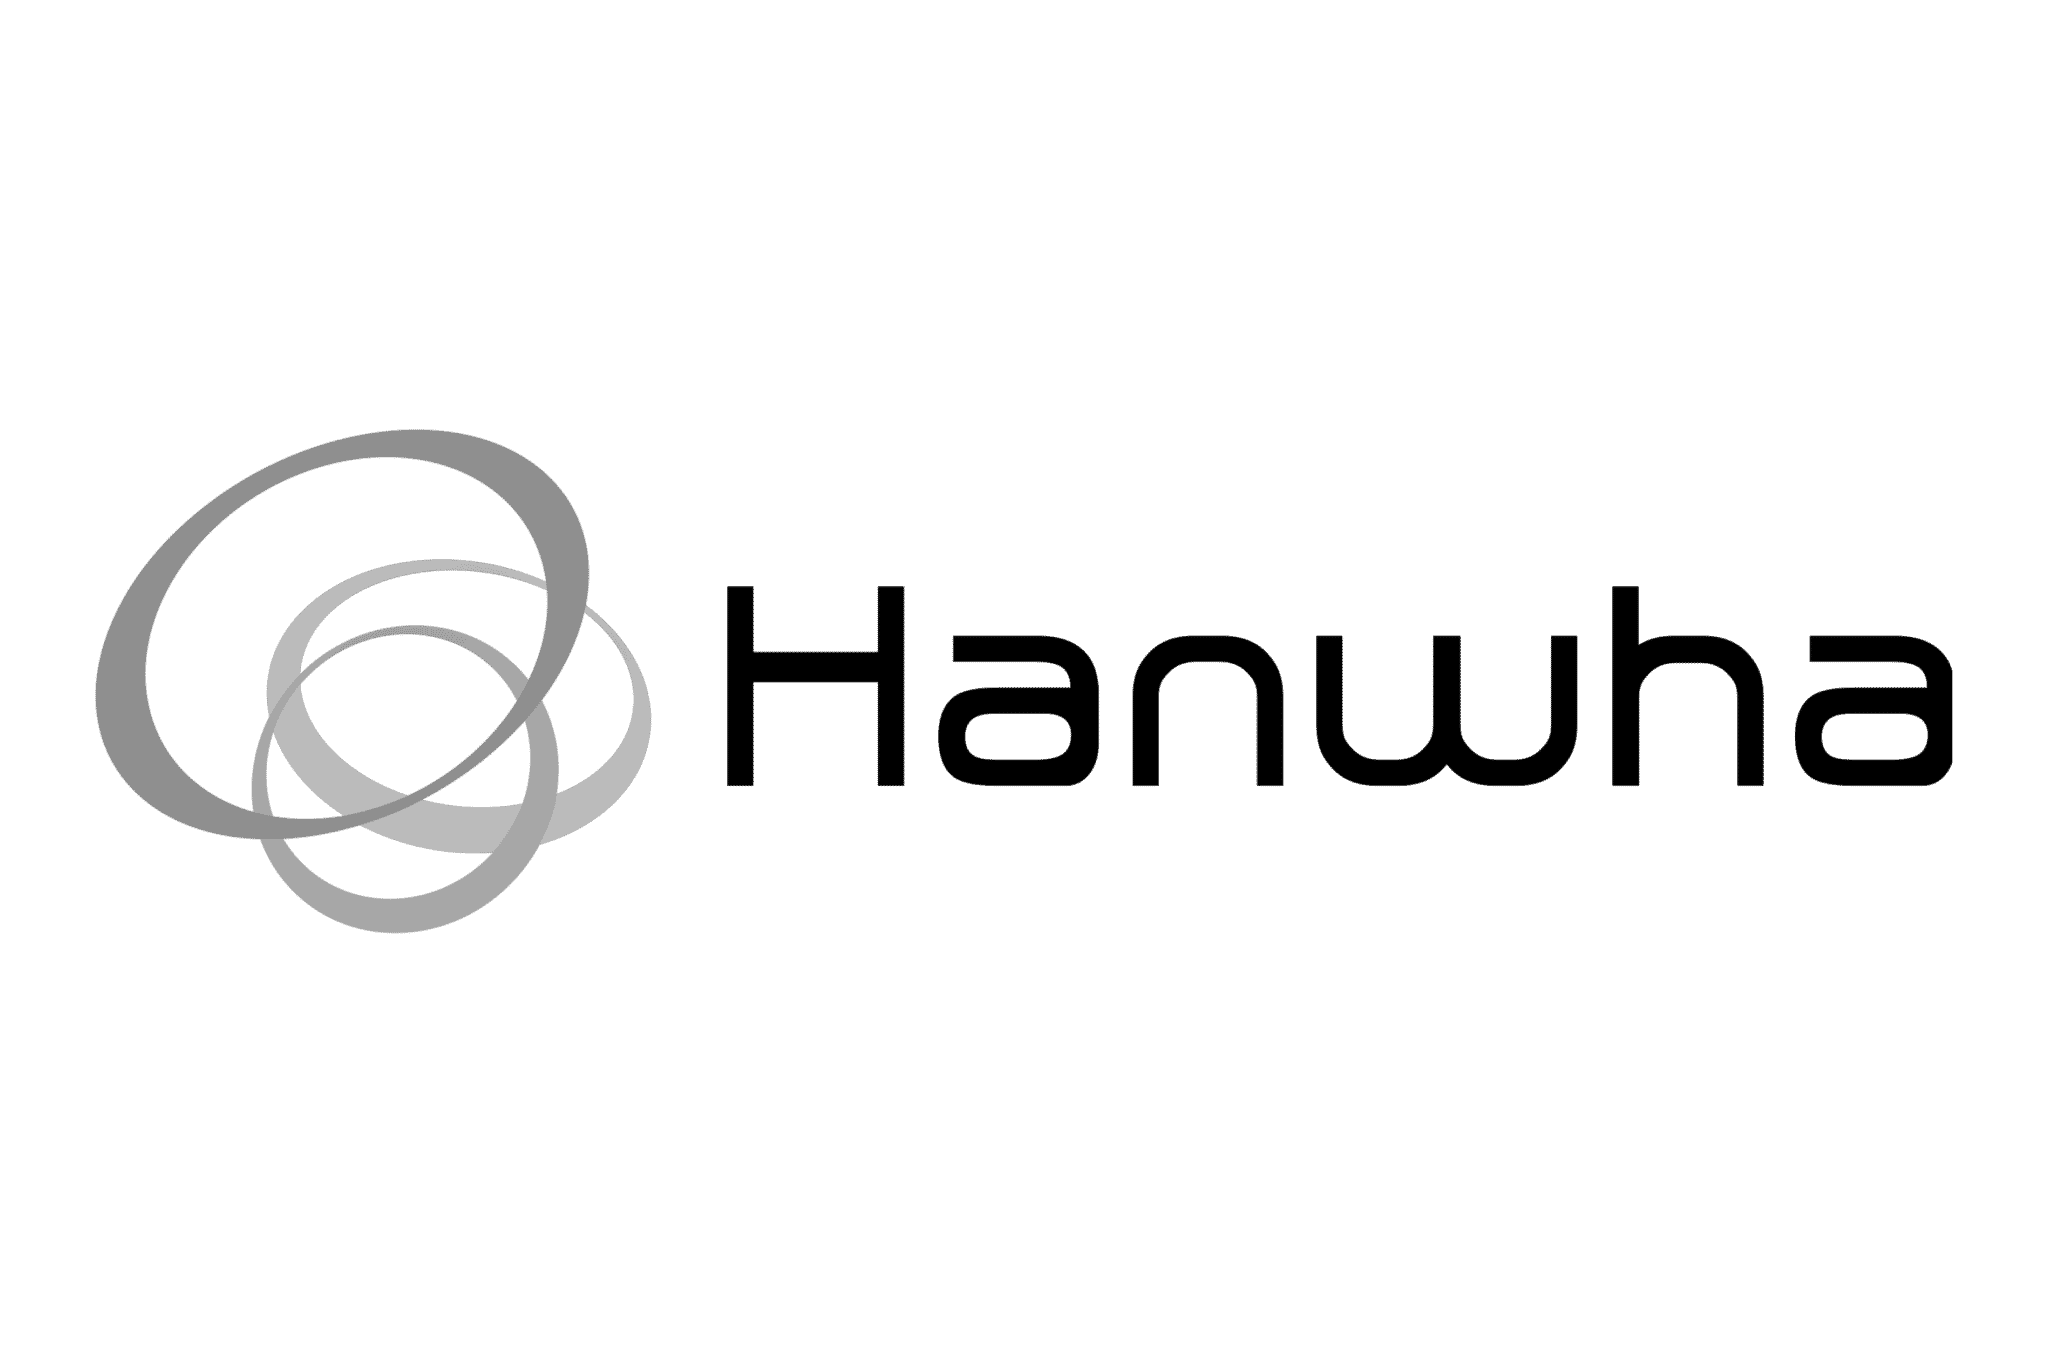 Logo Hanwha